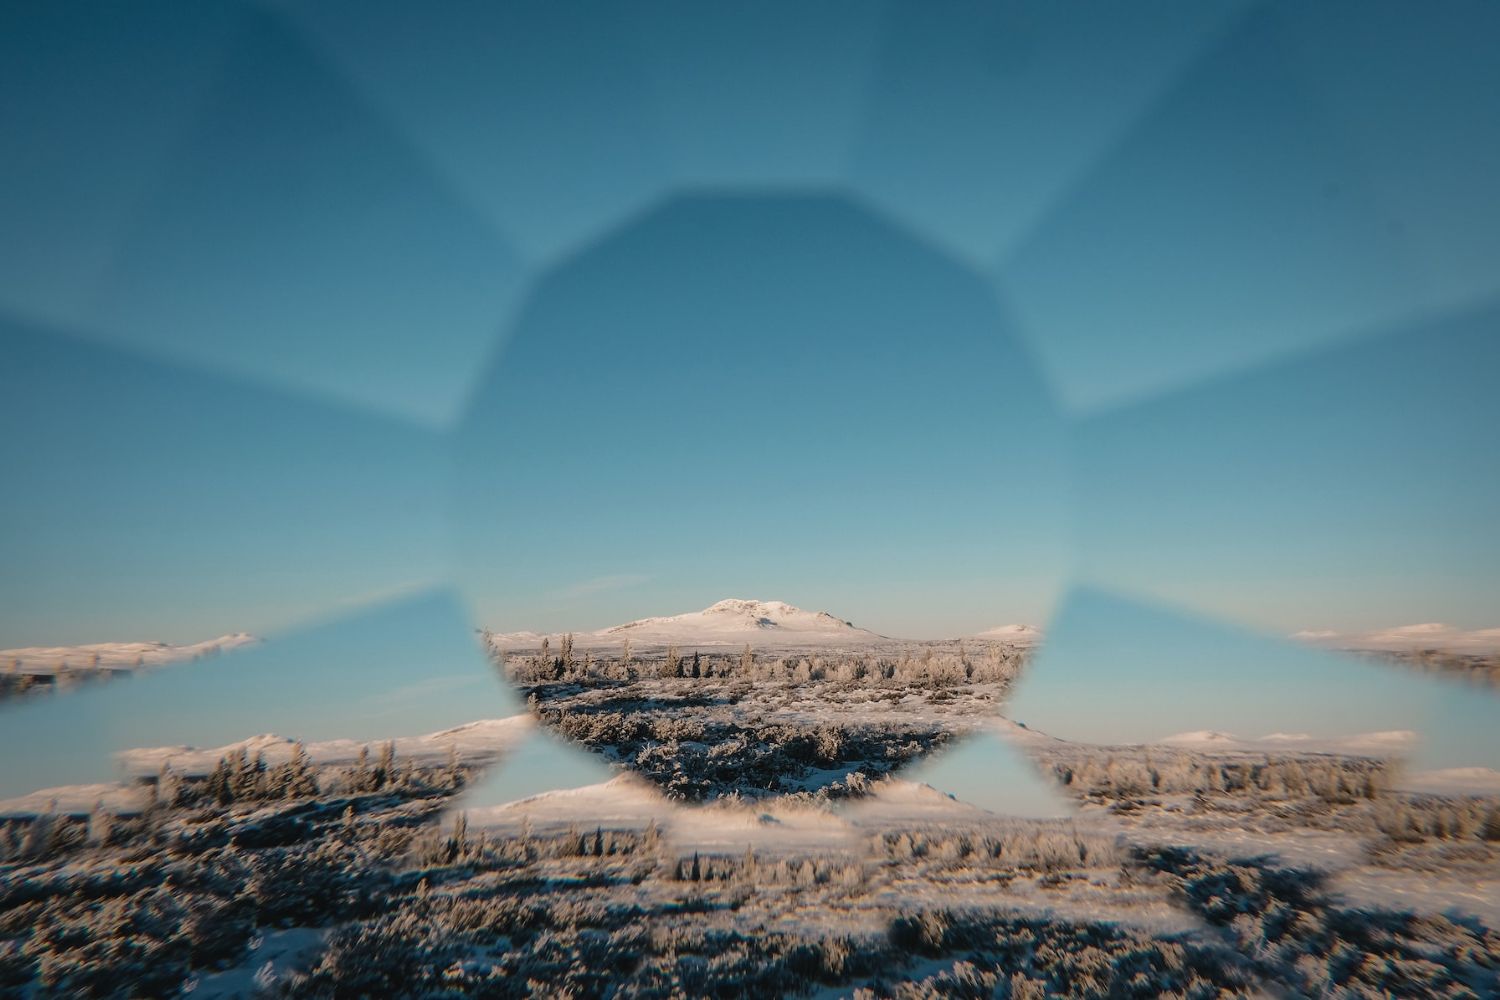 prism photo of scenery  by Fredrik Solli Wandem on Unsplash